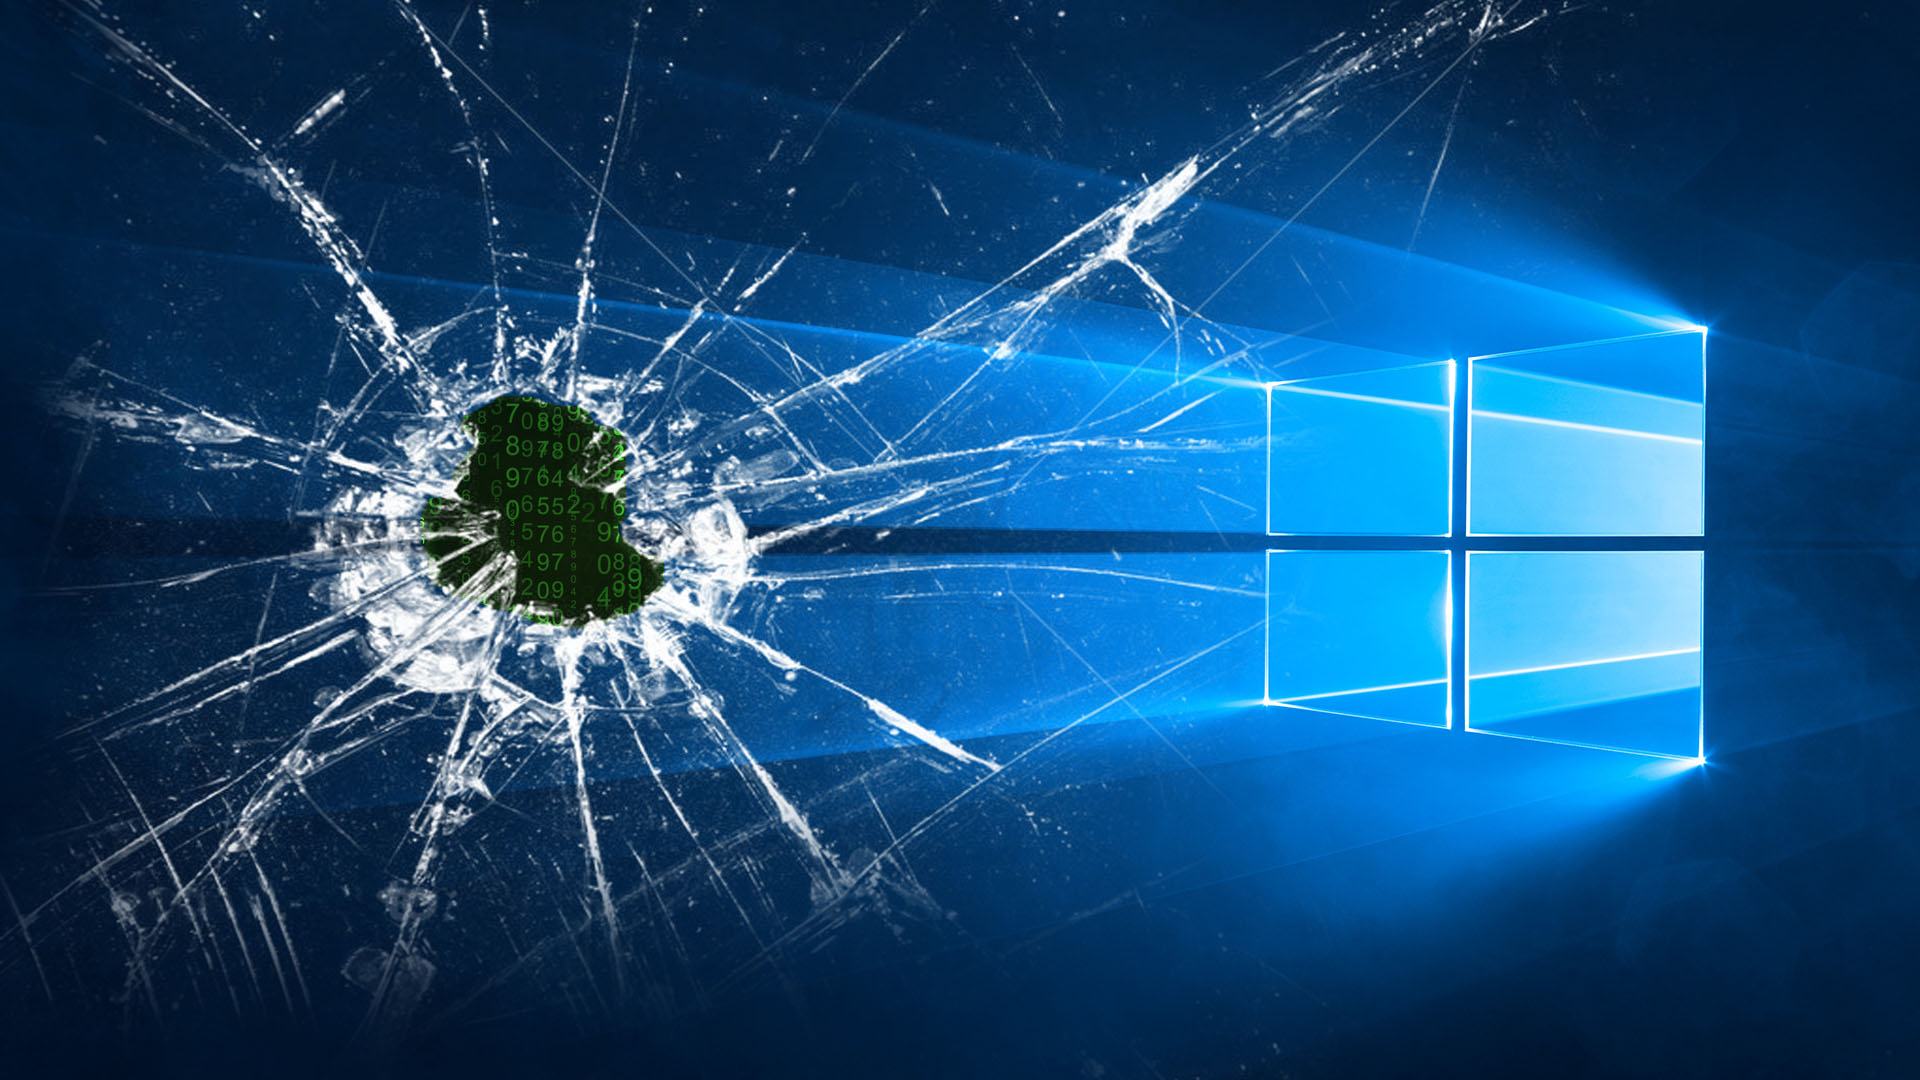 Crack Screen Windows 10 by KillerosCZ